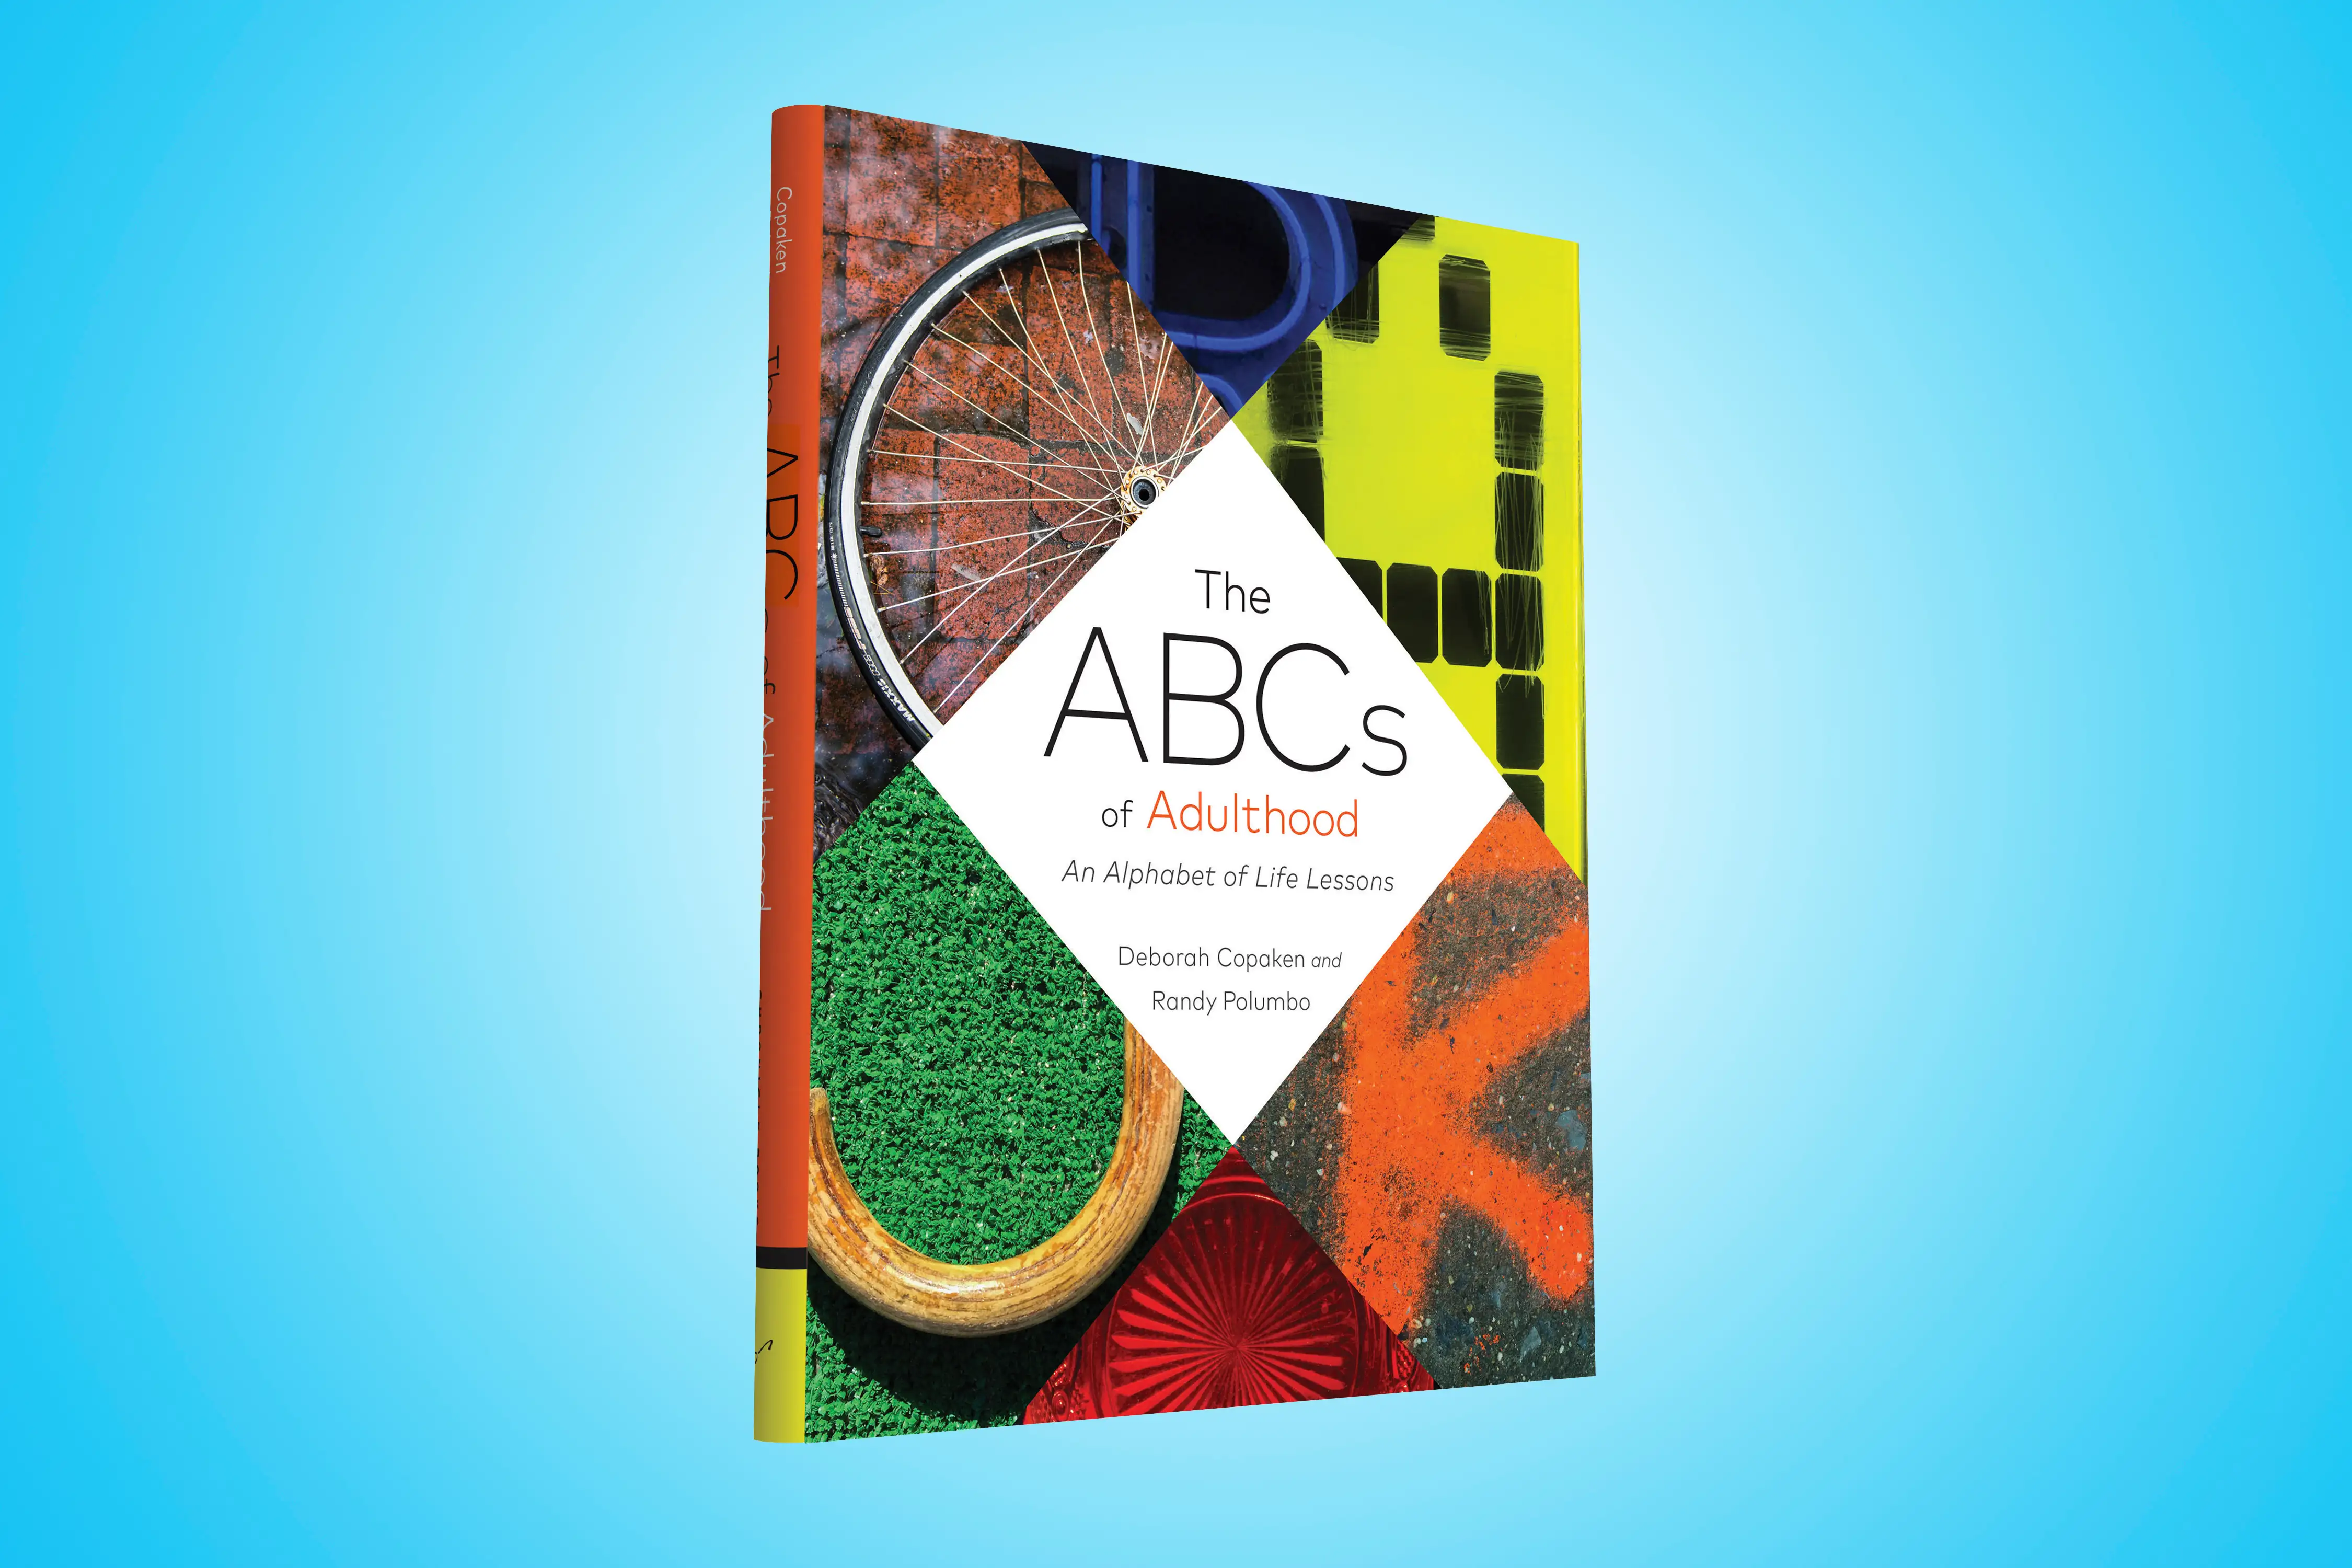 ABCs of Adulthood by Deborah Copaken, photographs by Randy Polumbo (Chronicle Books, 2016)